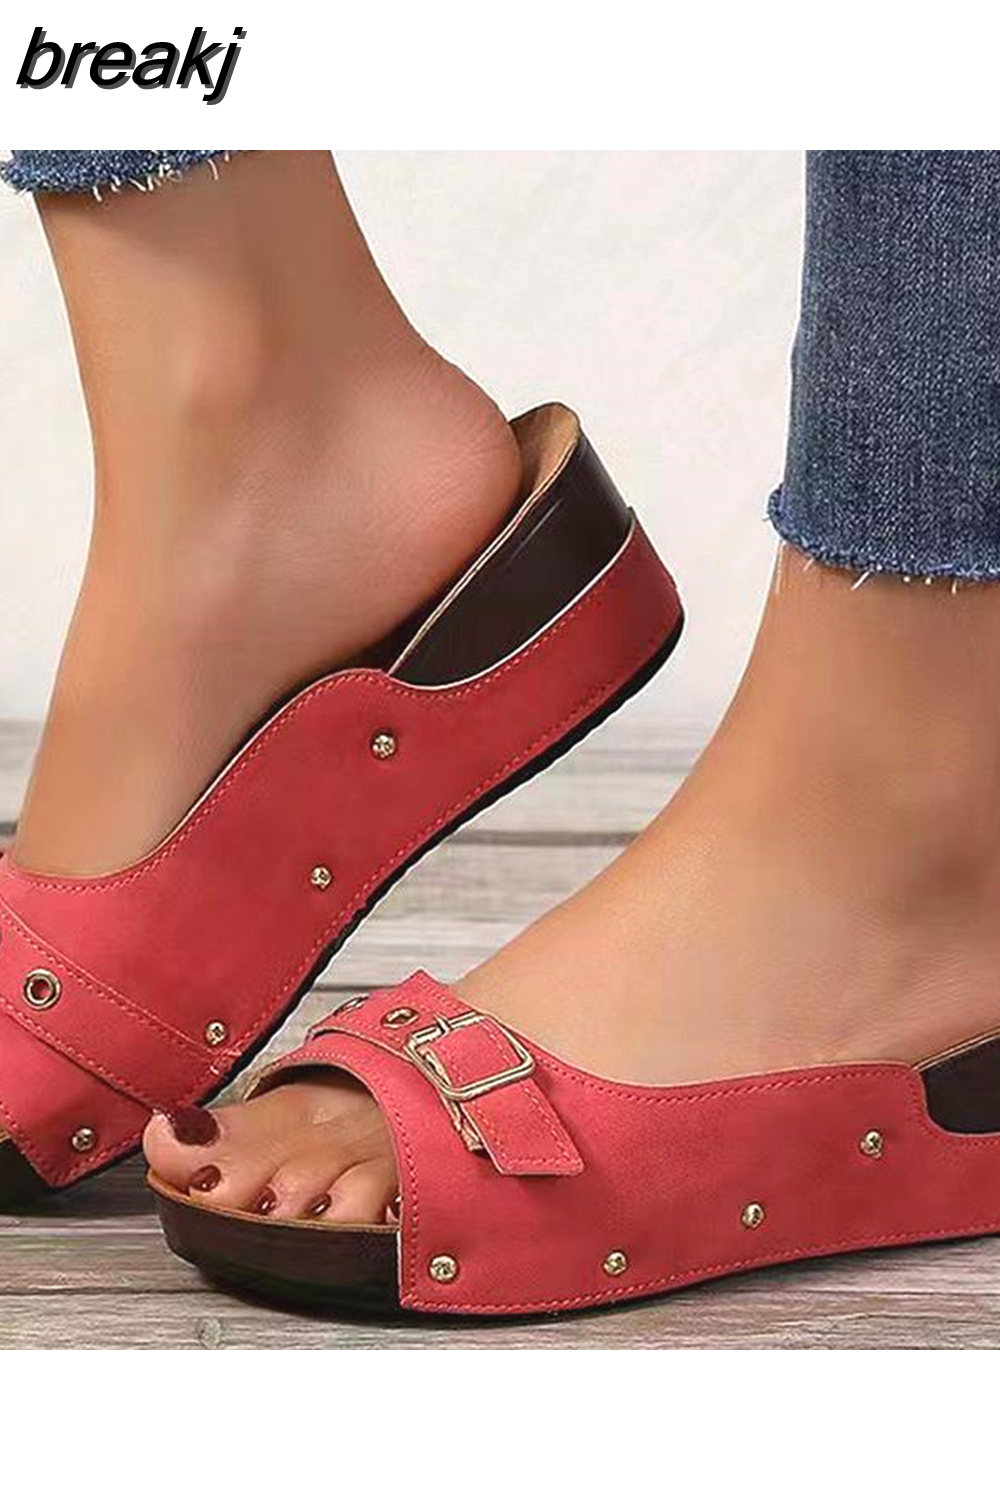 breakj Women Sandals 2023 Fashion Heels Shoes For Women Summer Sandals Slip On Wedges Zapatos Mujer Outdoor Slippers Platform Sandals